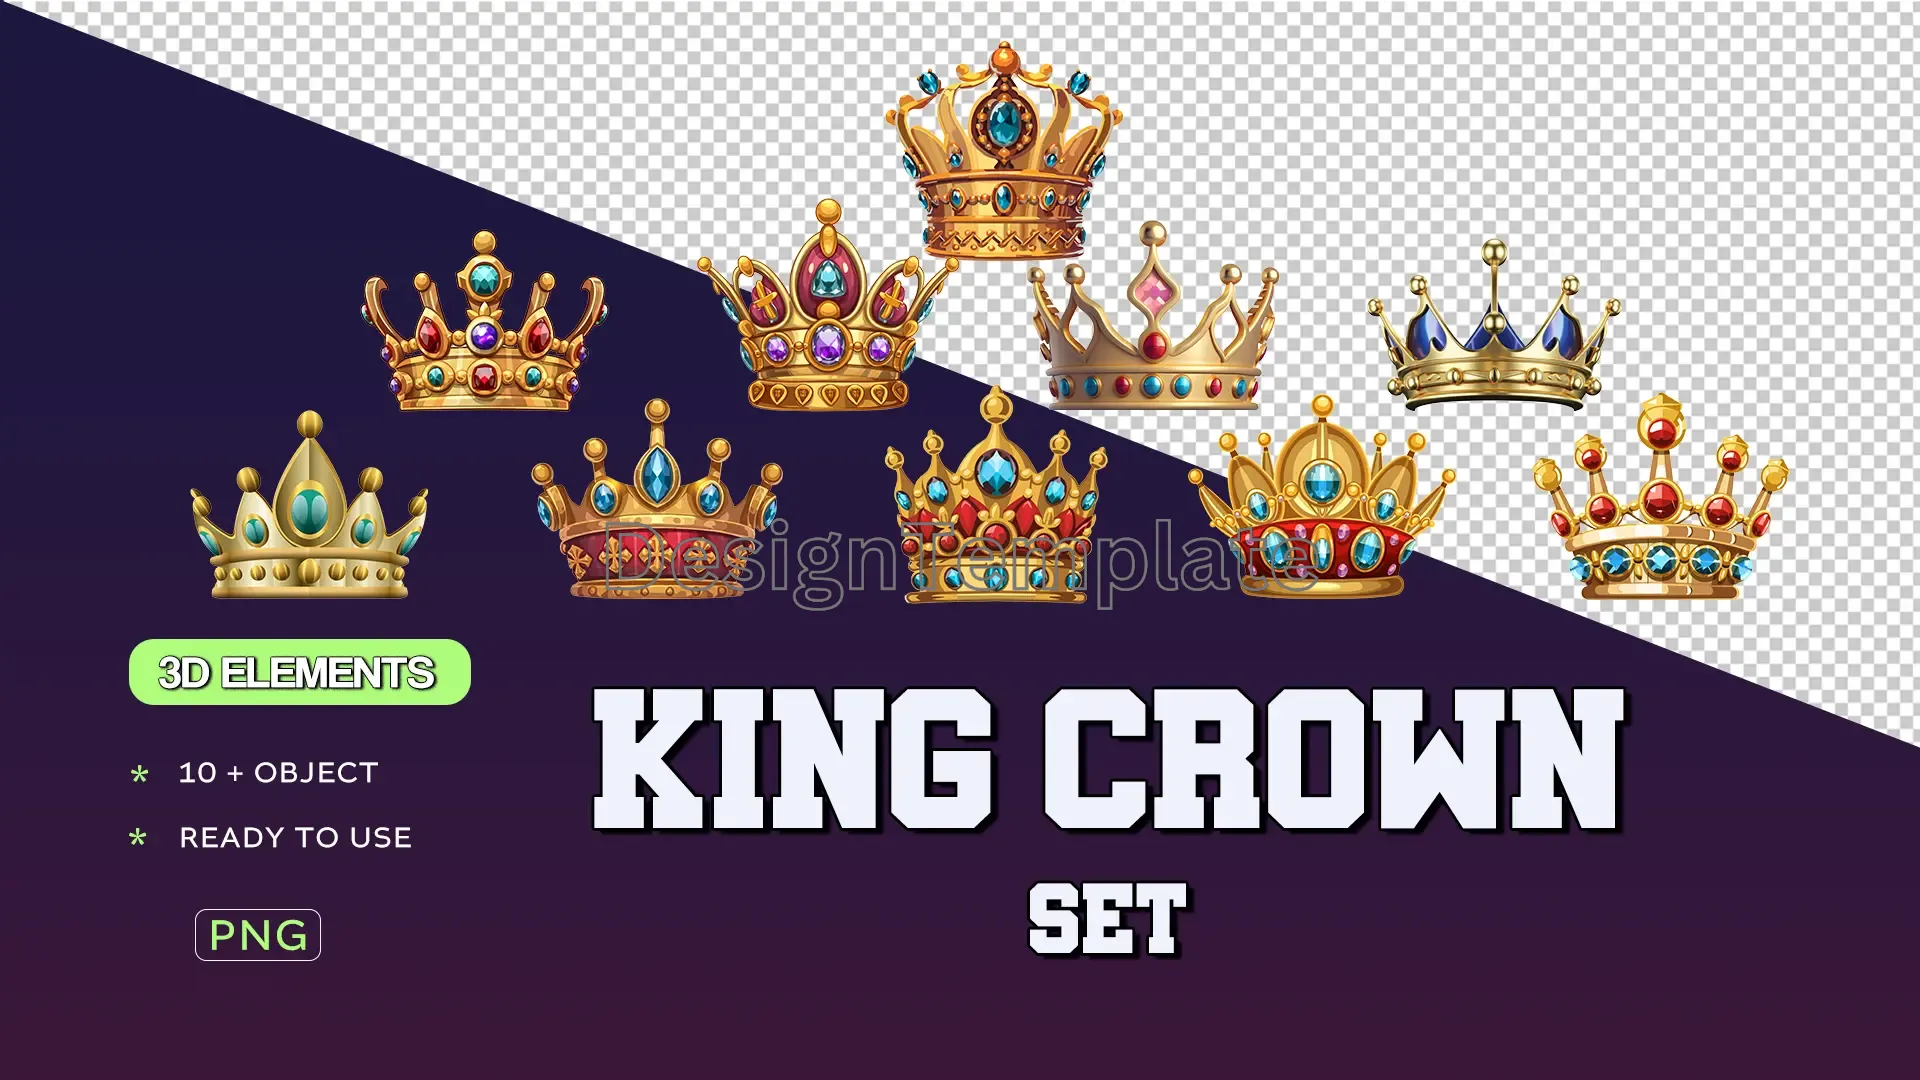 Monarch's Crown Elite 3D King Crown Set image